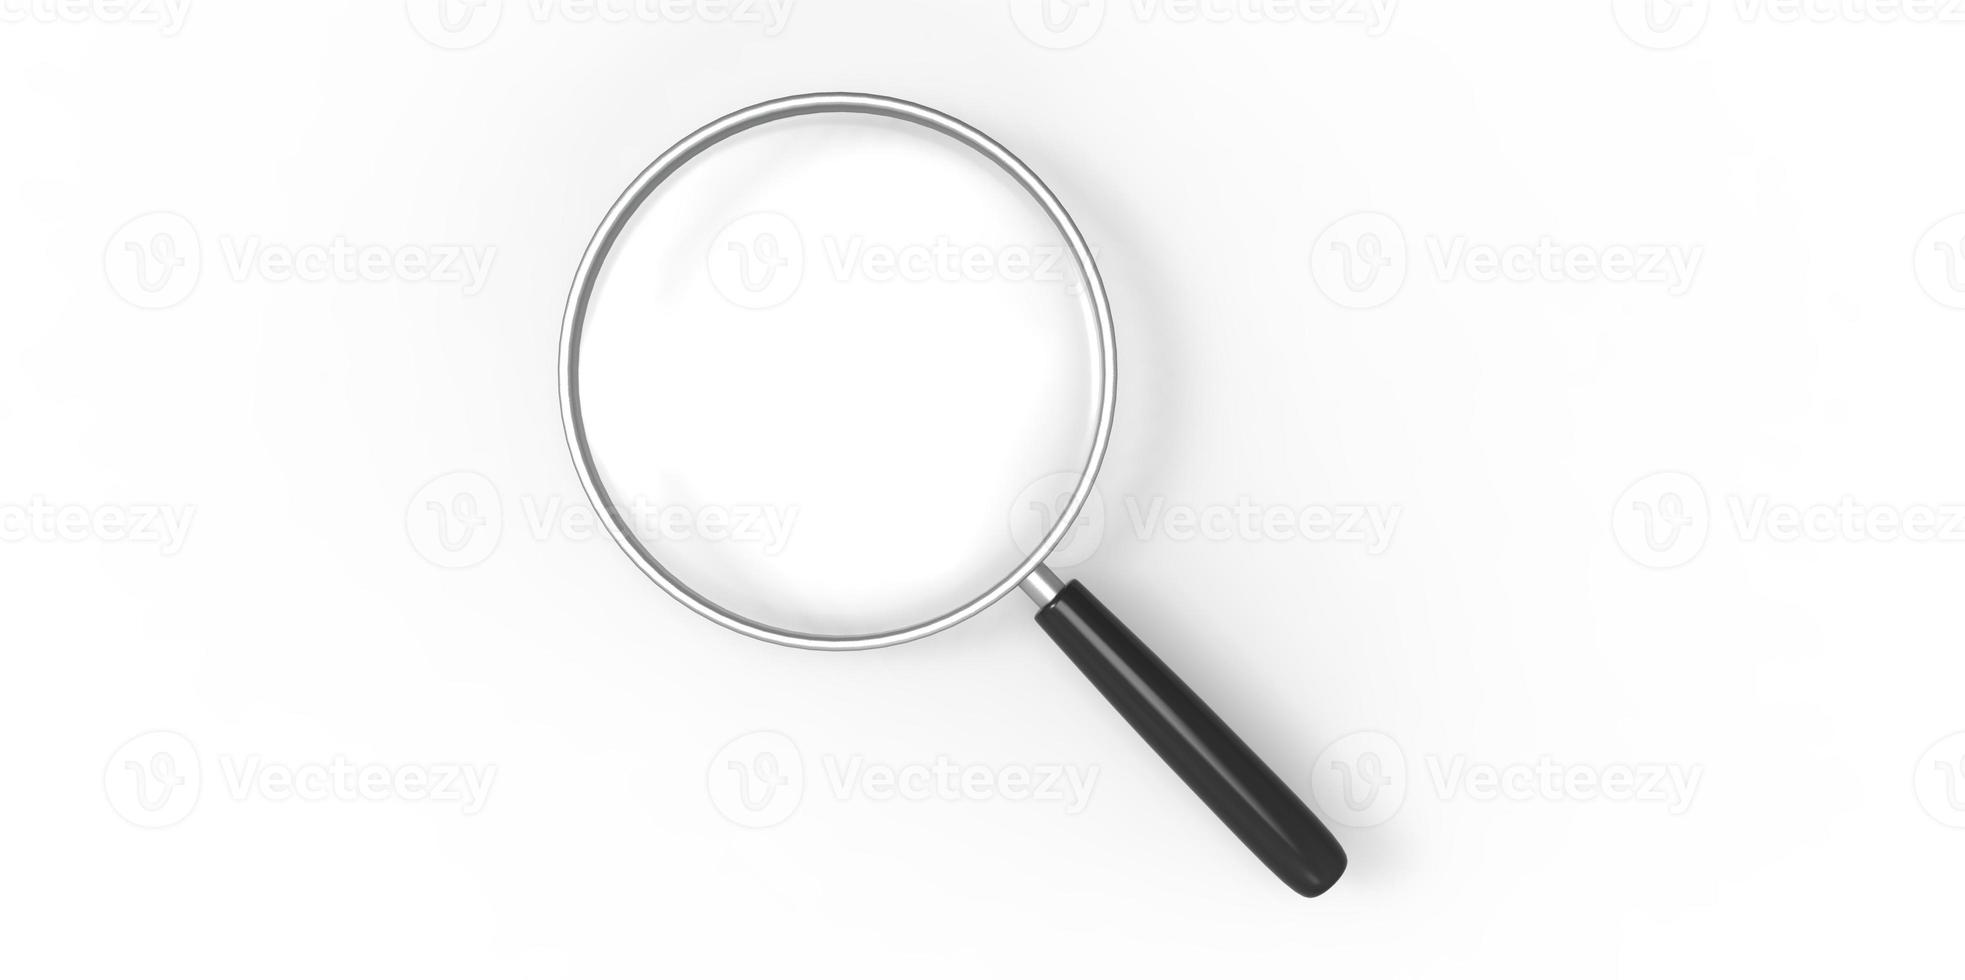 Magnifier on a plain background photo